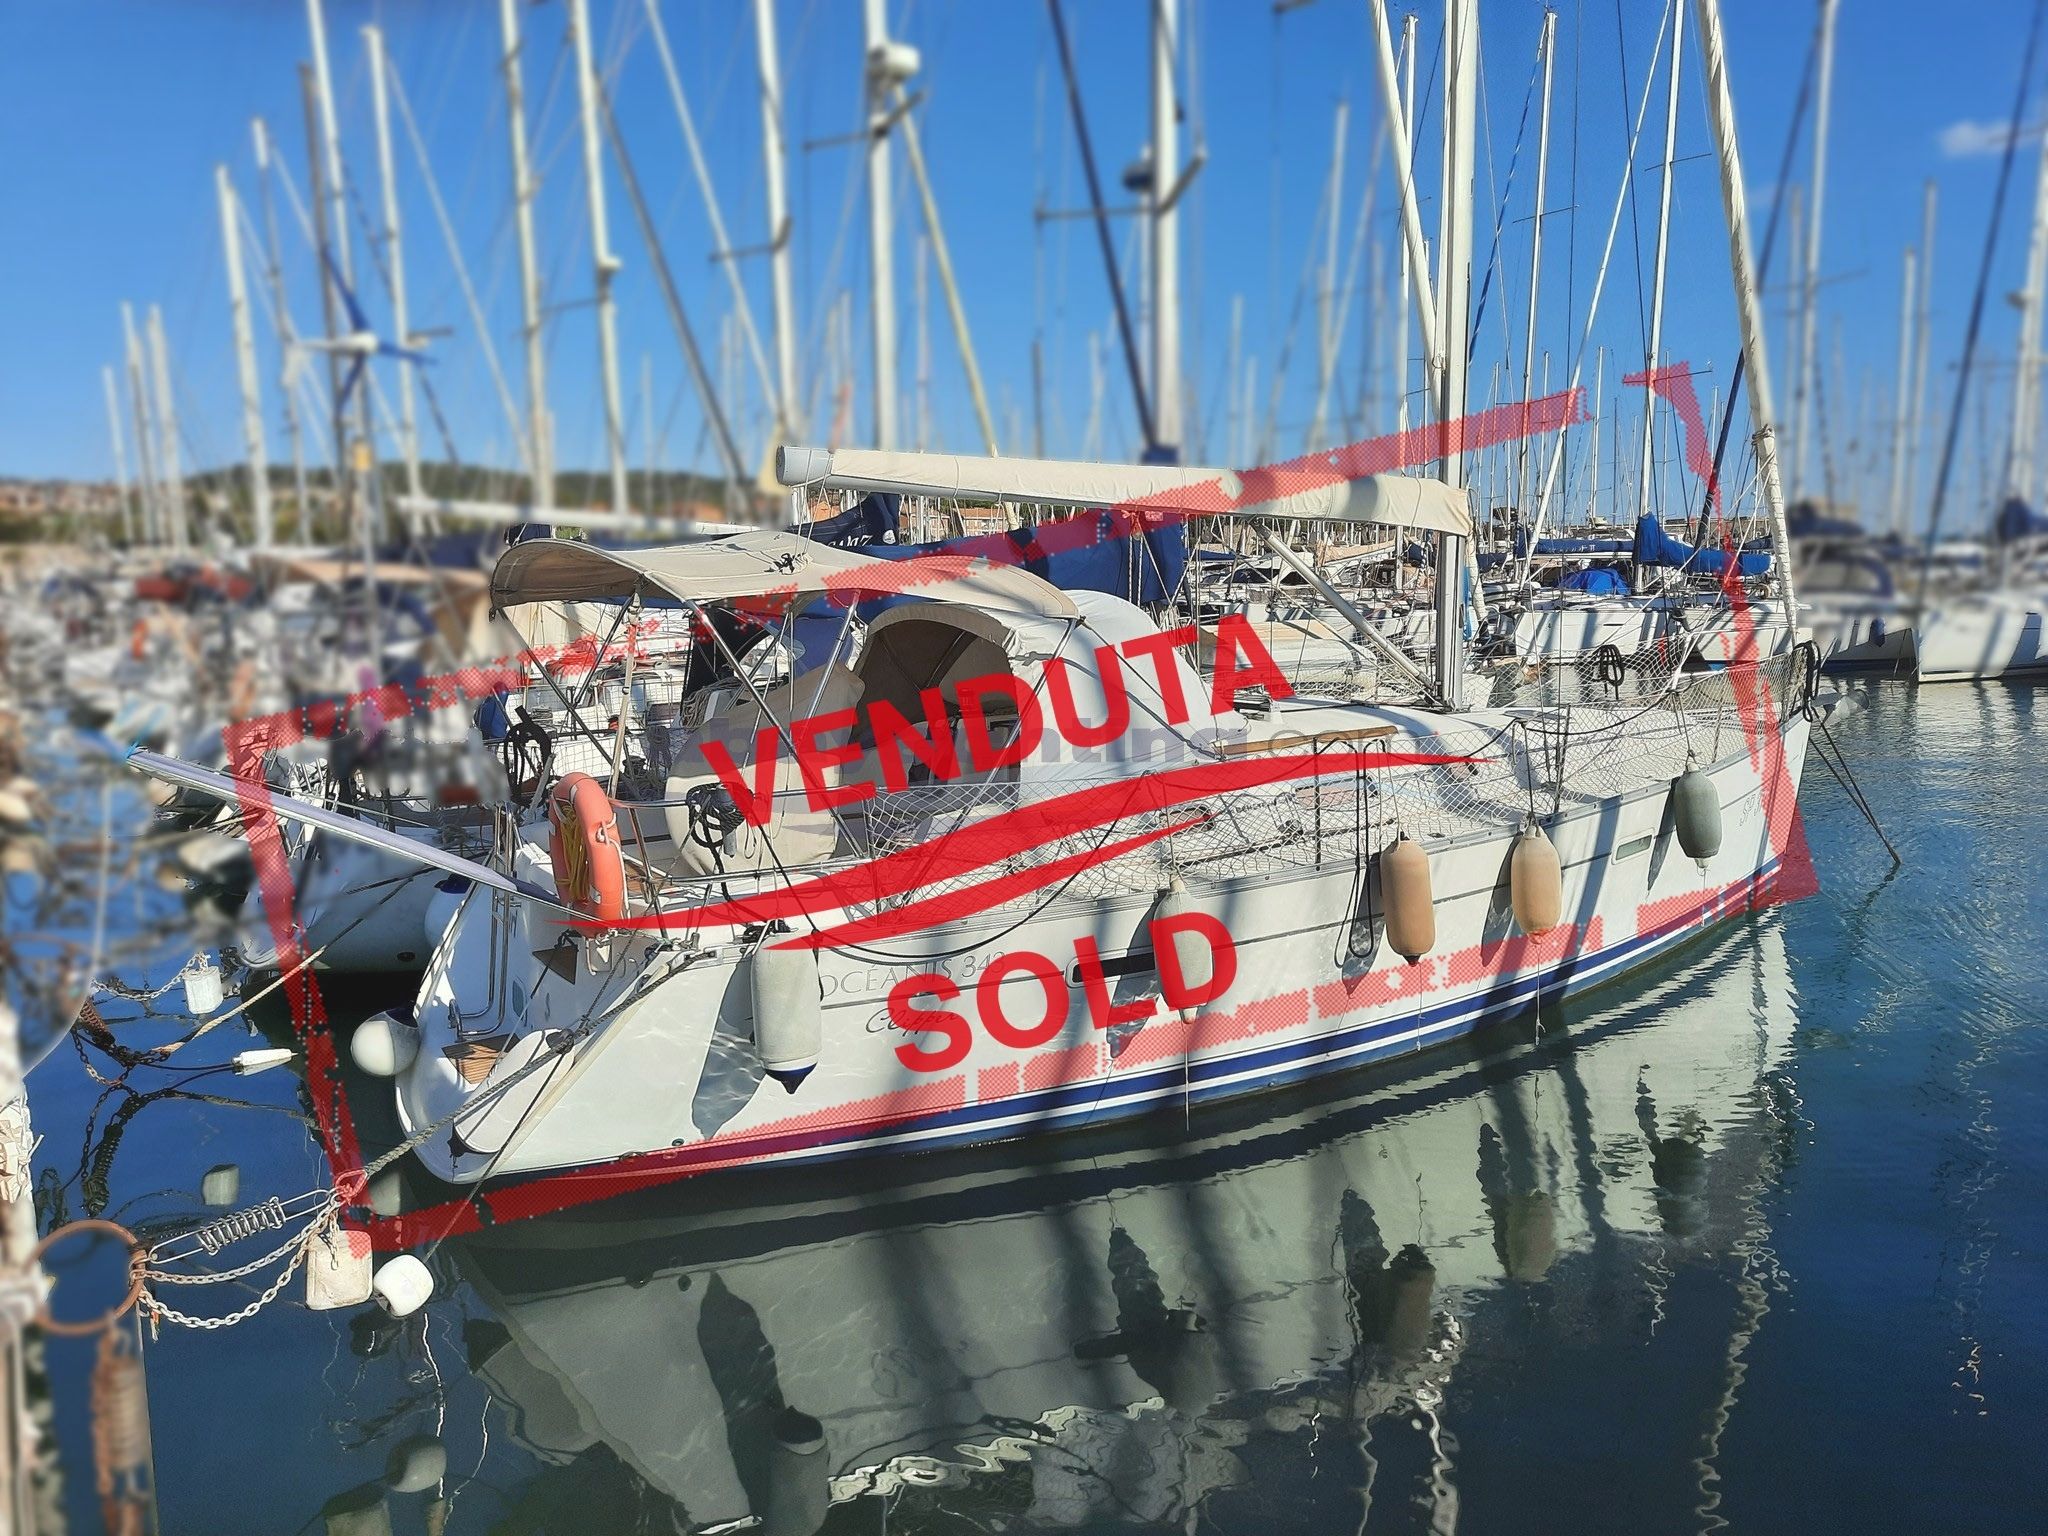 Beneteau Oceanis 343 sold